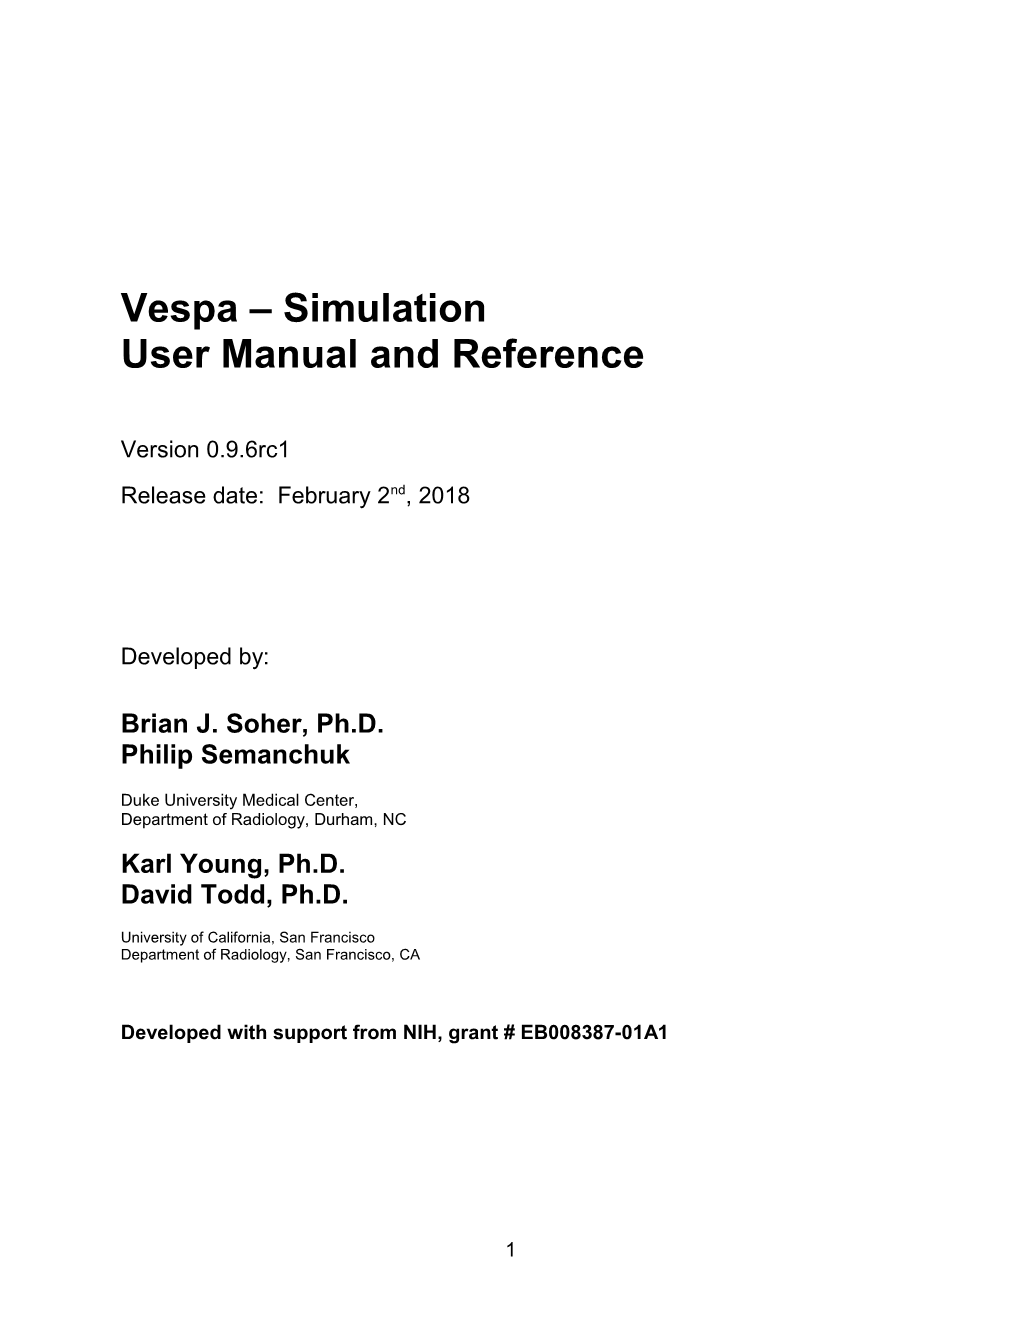 Vespa-Simulation User Manual